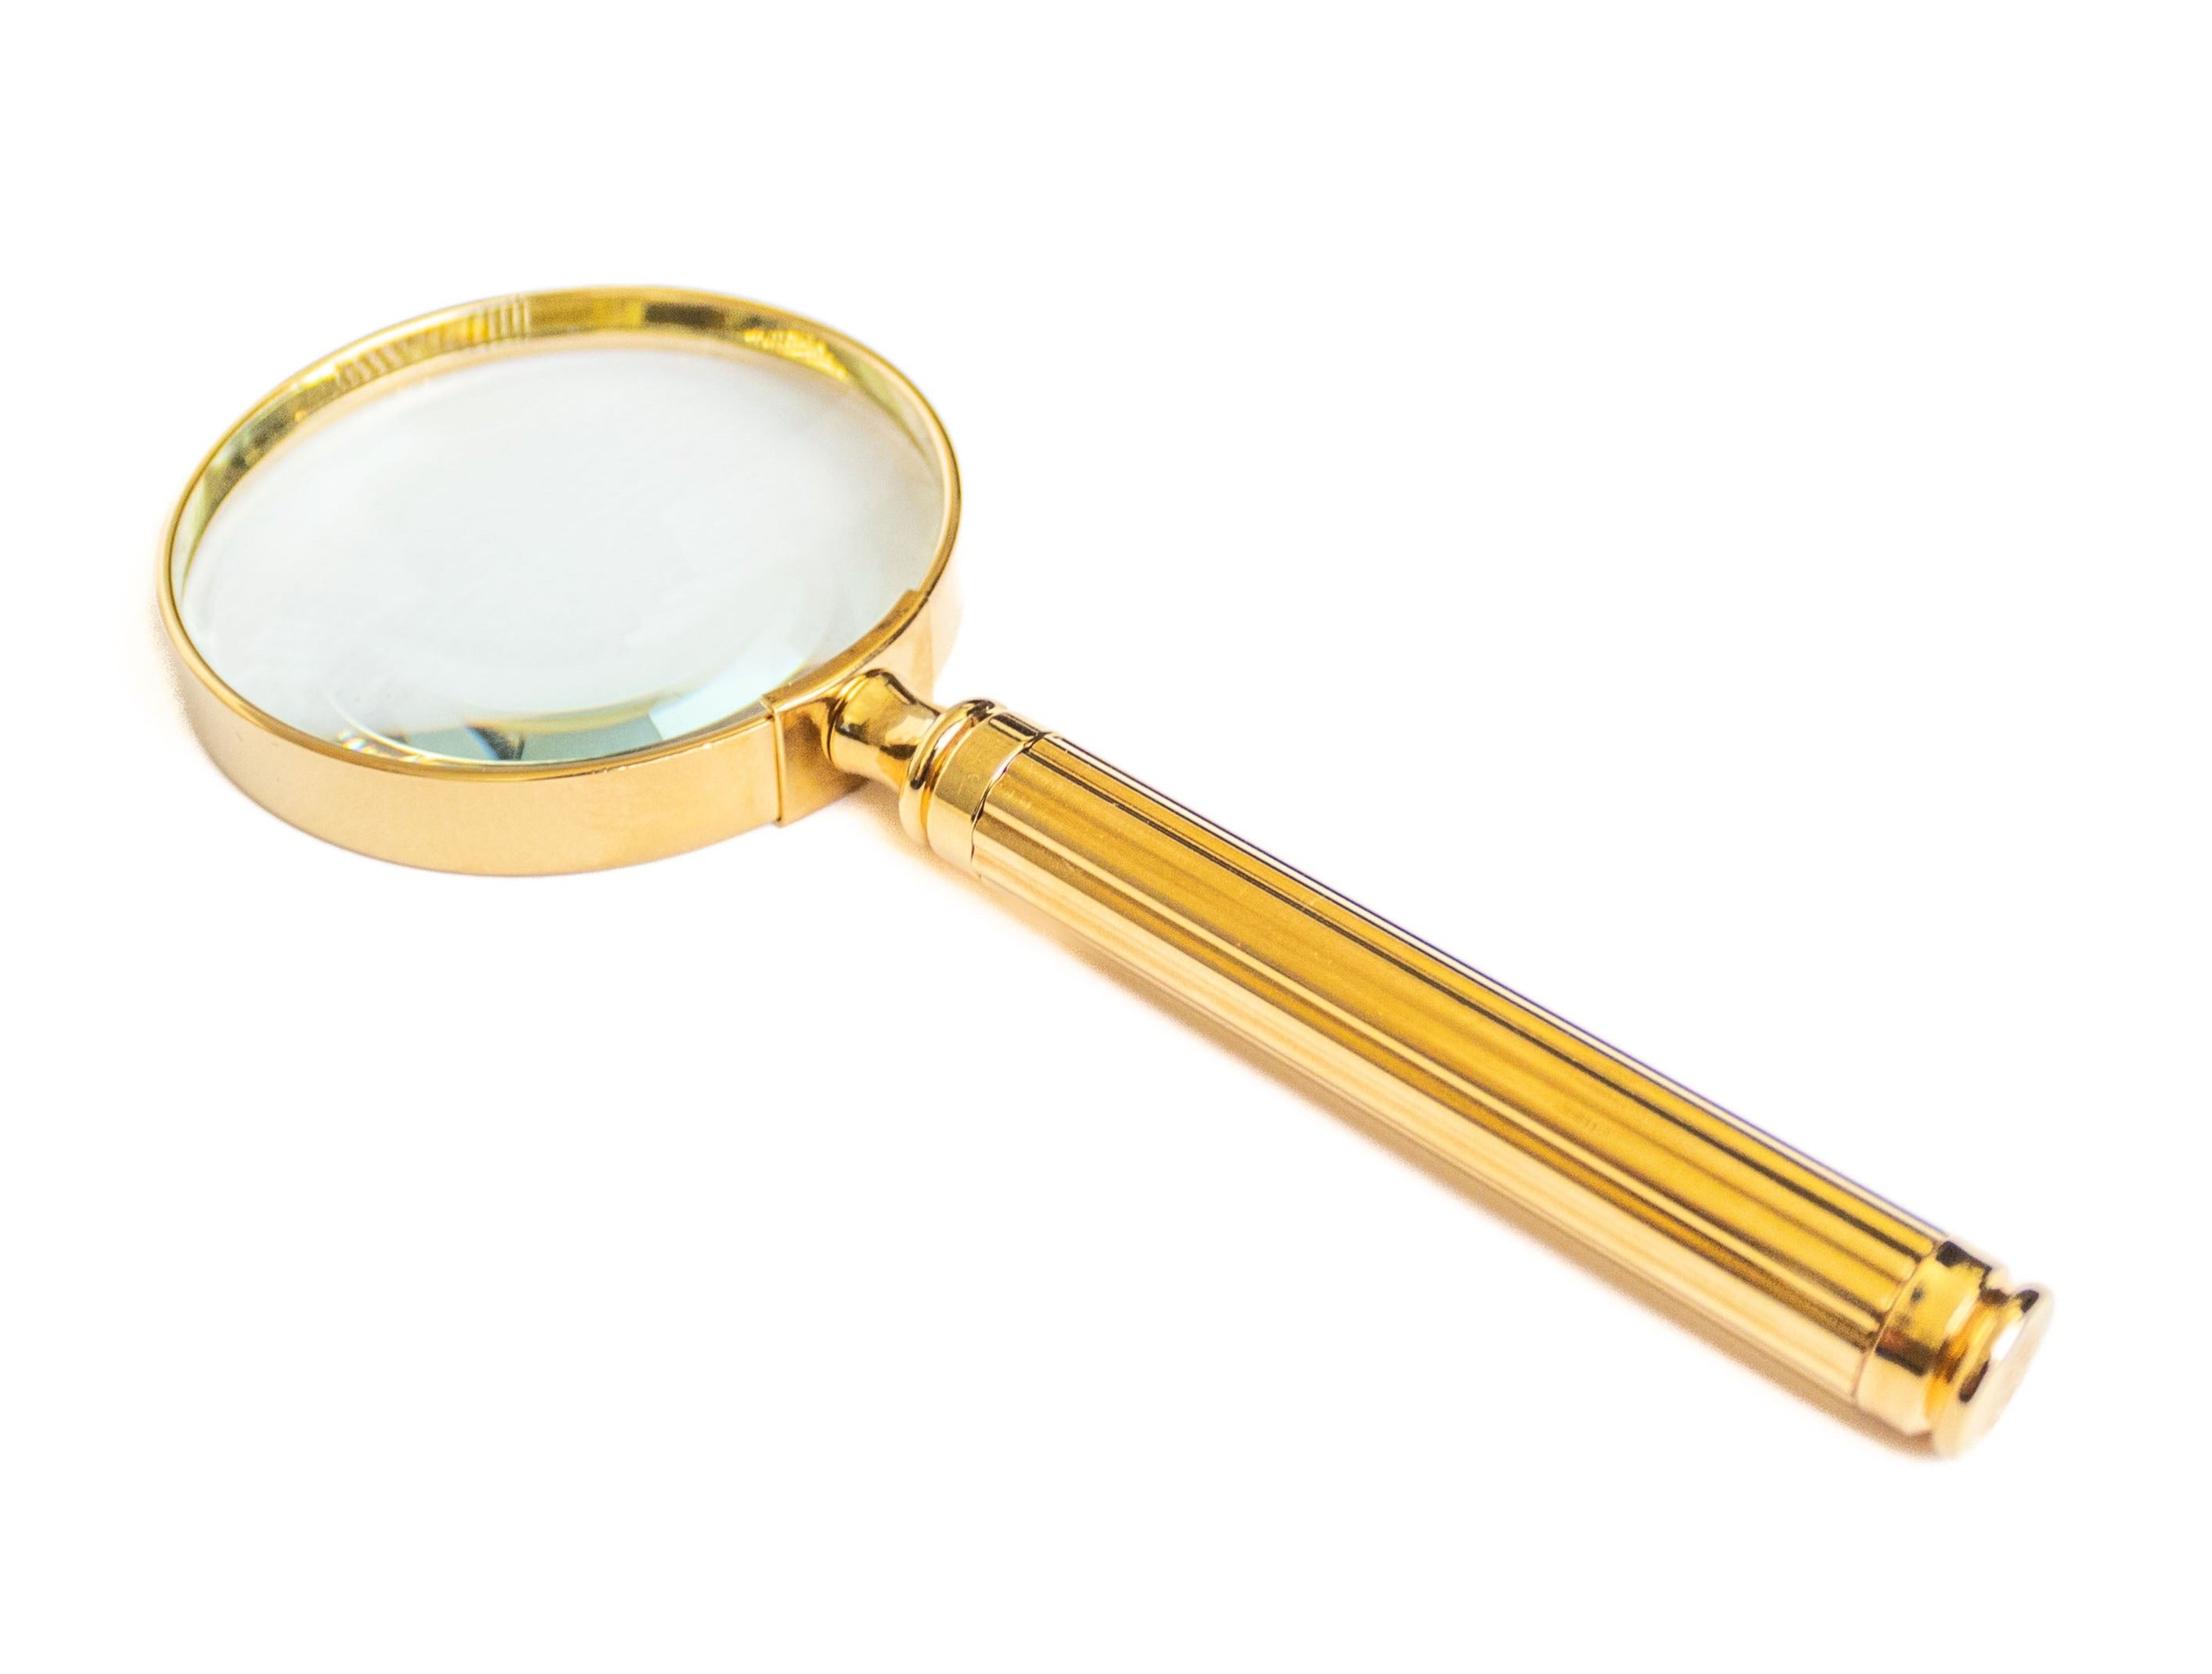 23K gold plated classic Magnifier - El Casco